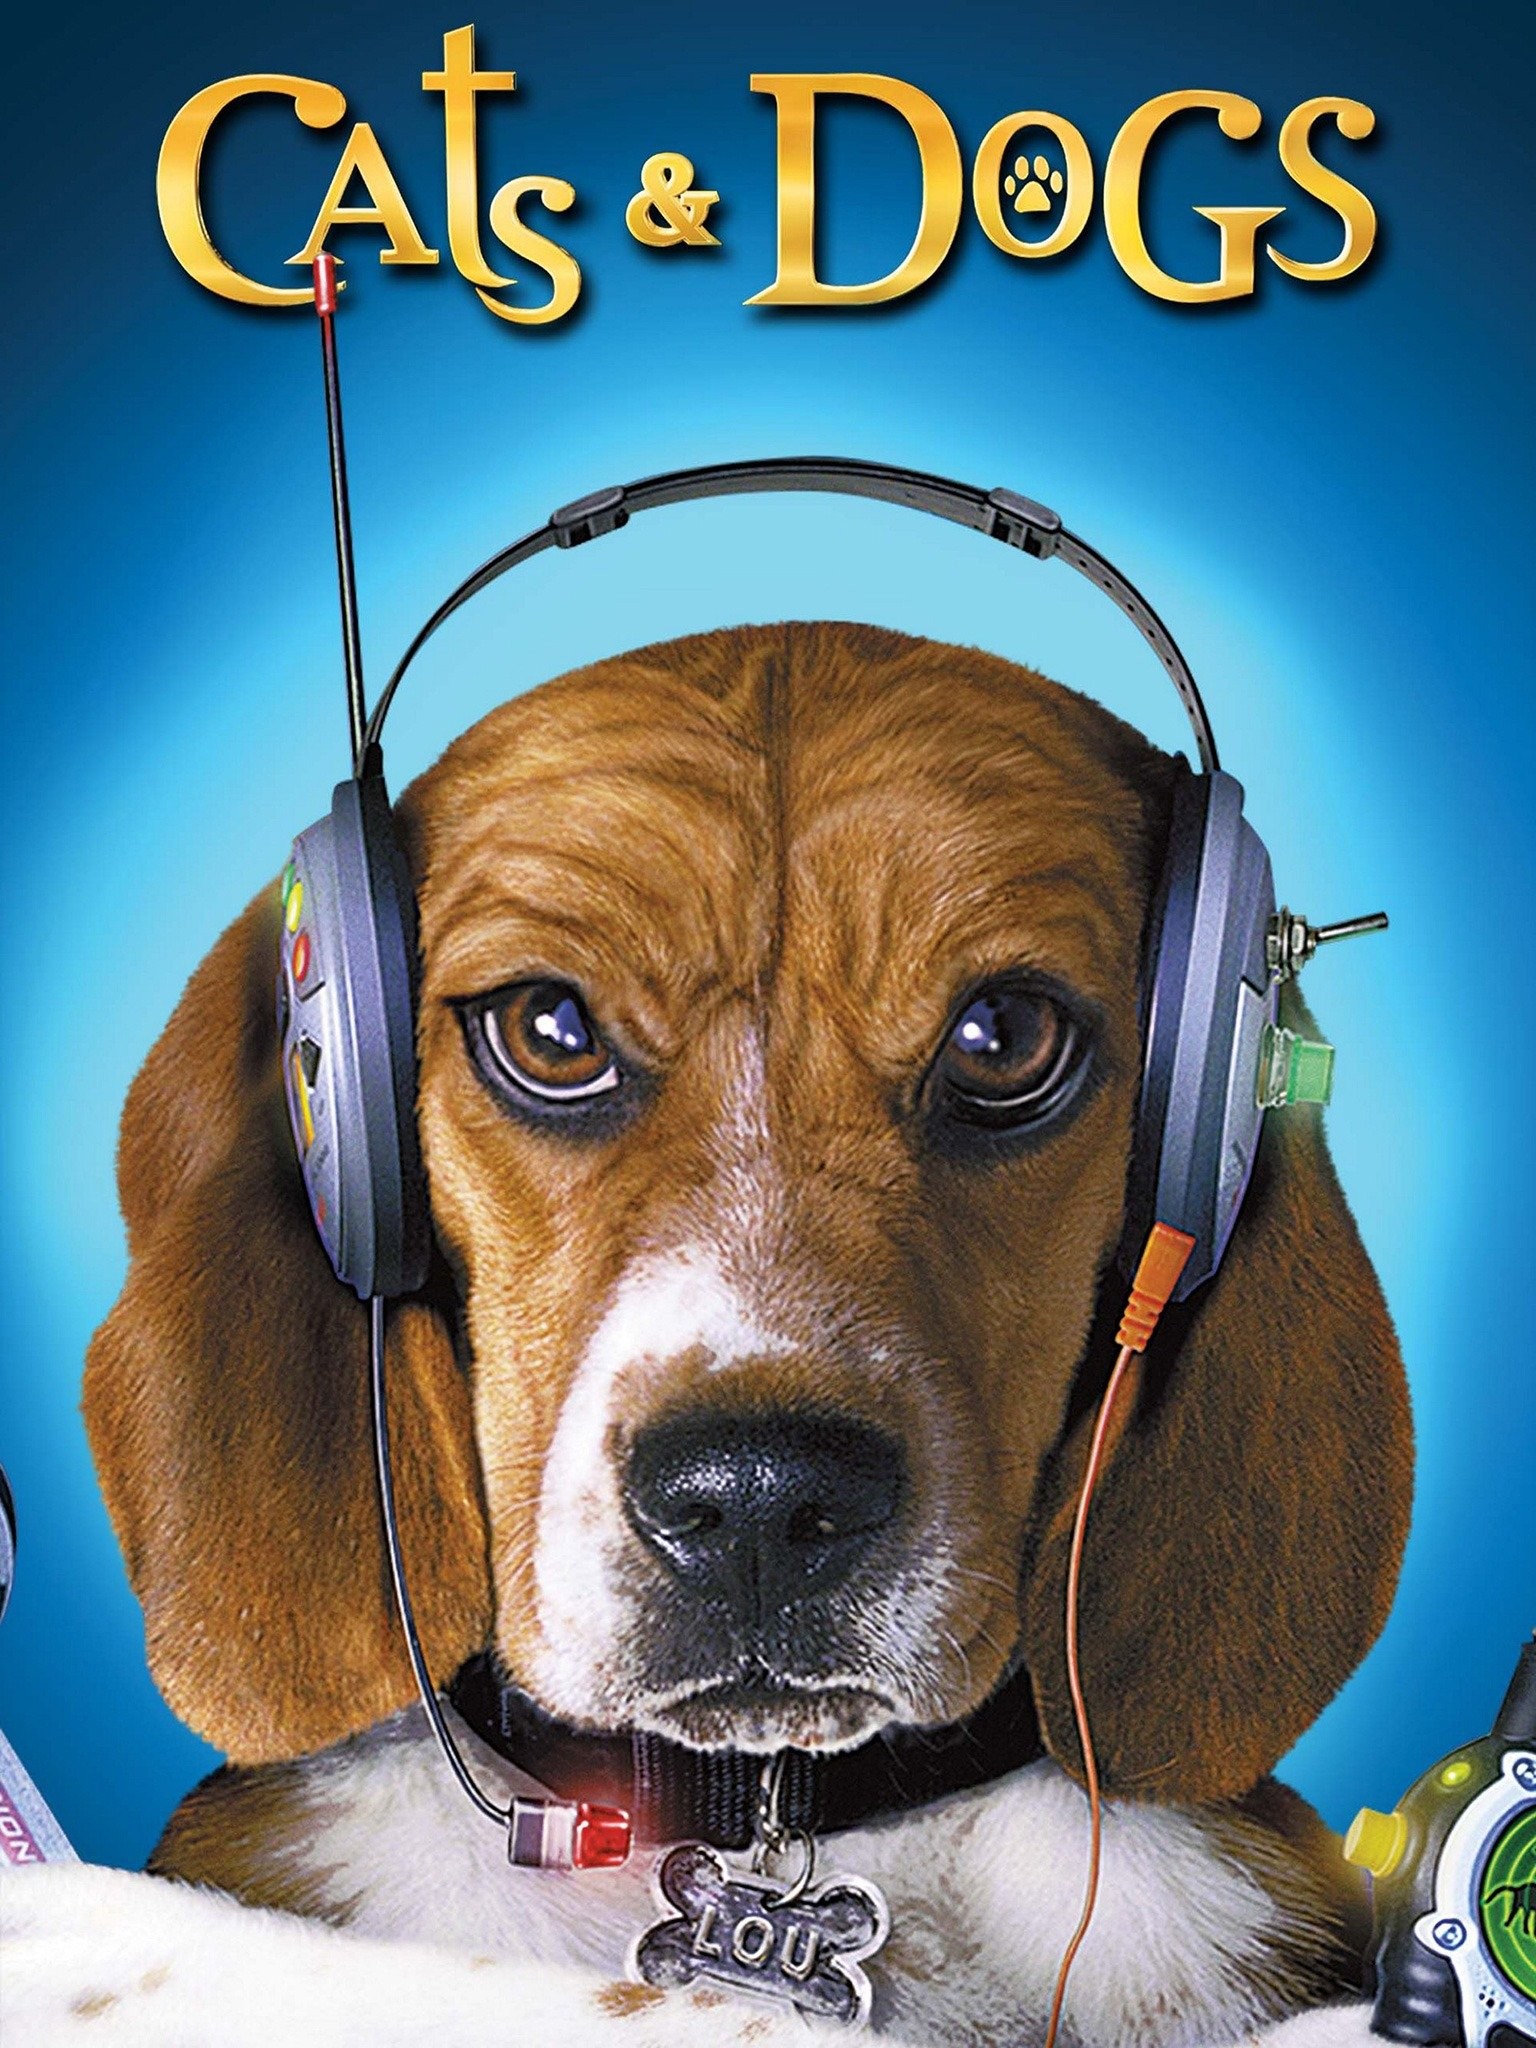 Cats & Dogs (2001) - IMDb